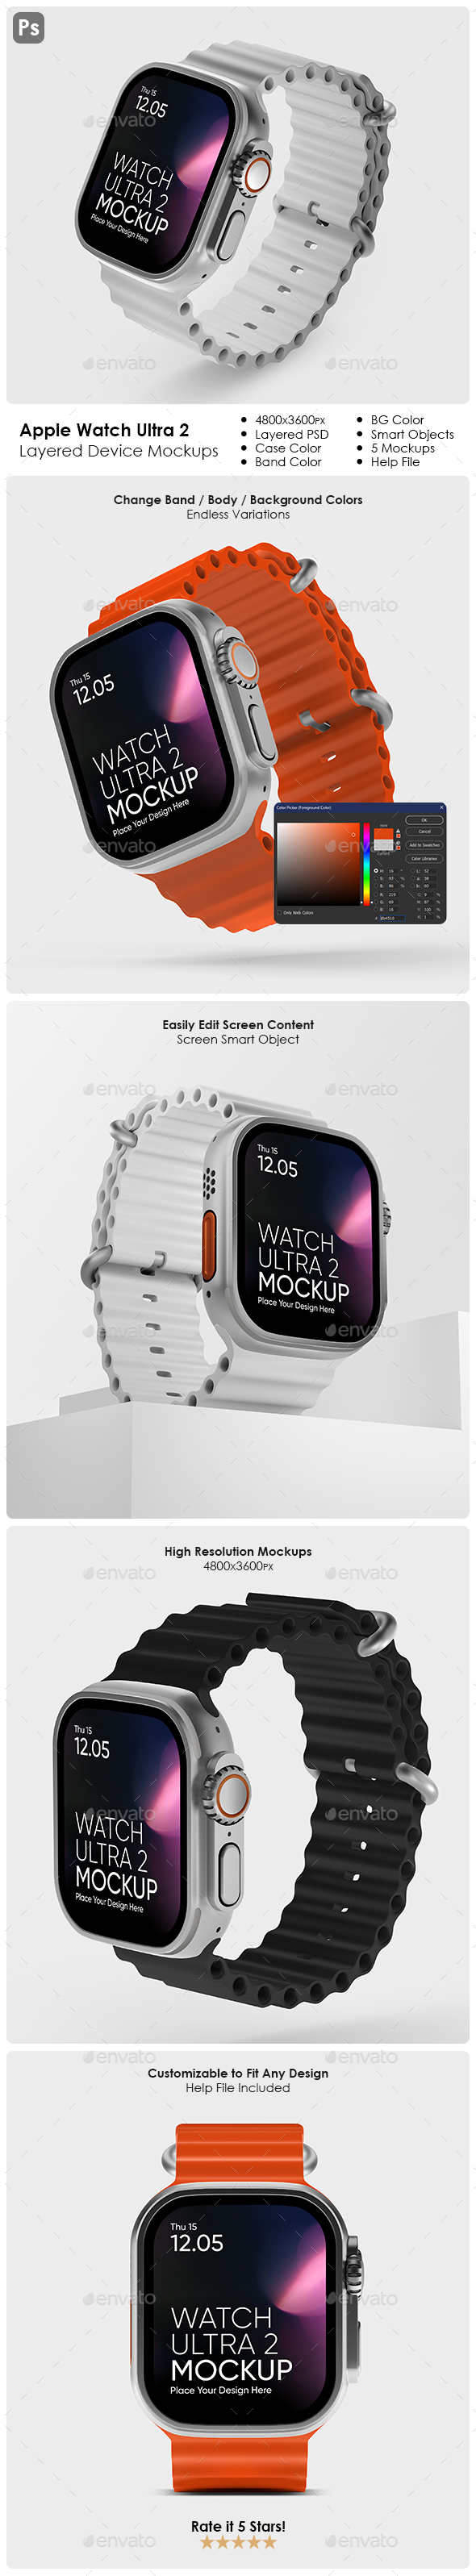 [DOWNLOAD]Apple Watch Ultra 2 Device Mockups